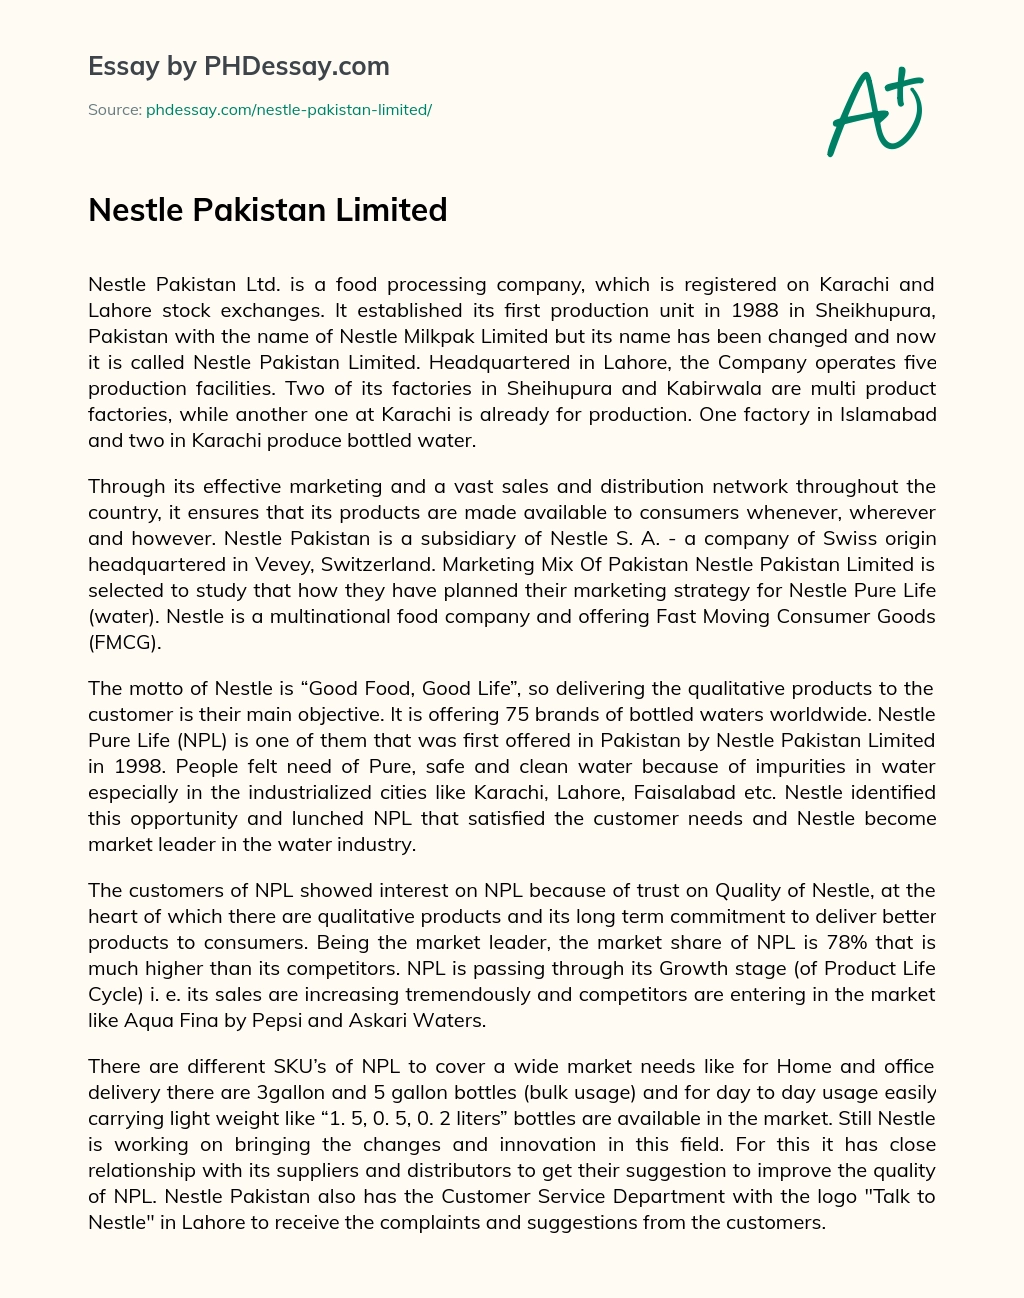 Nestle Pakistan Limited essay